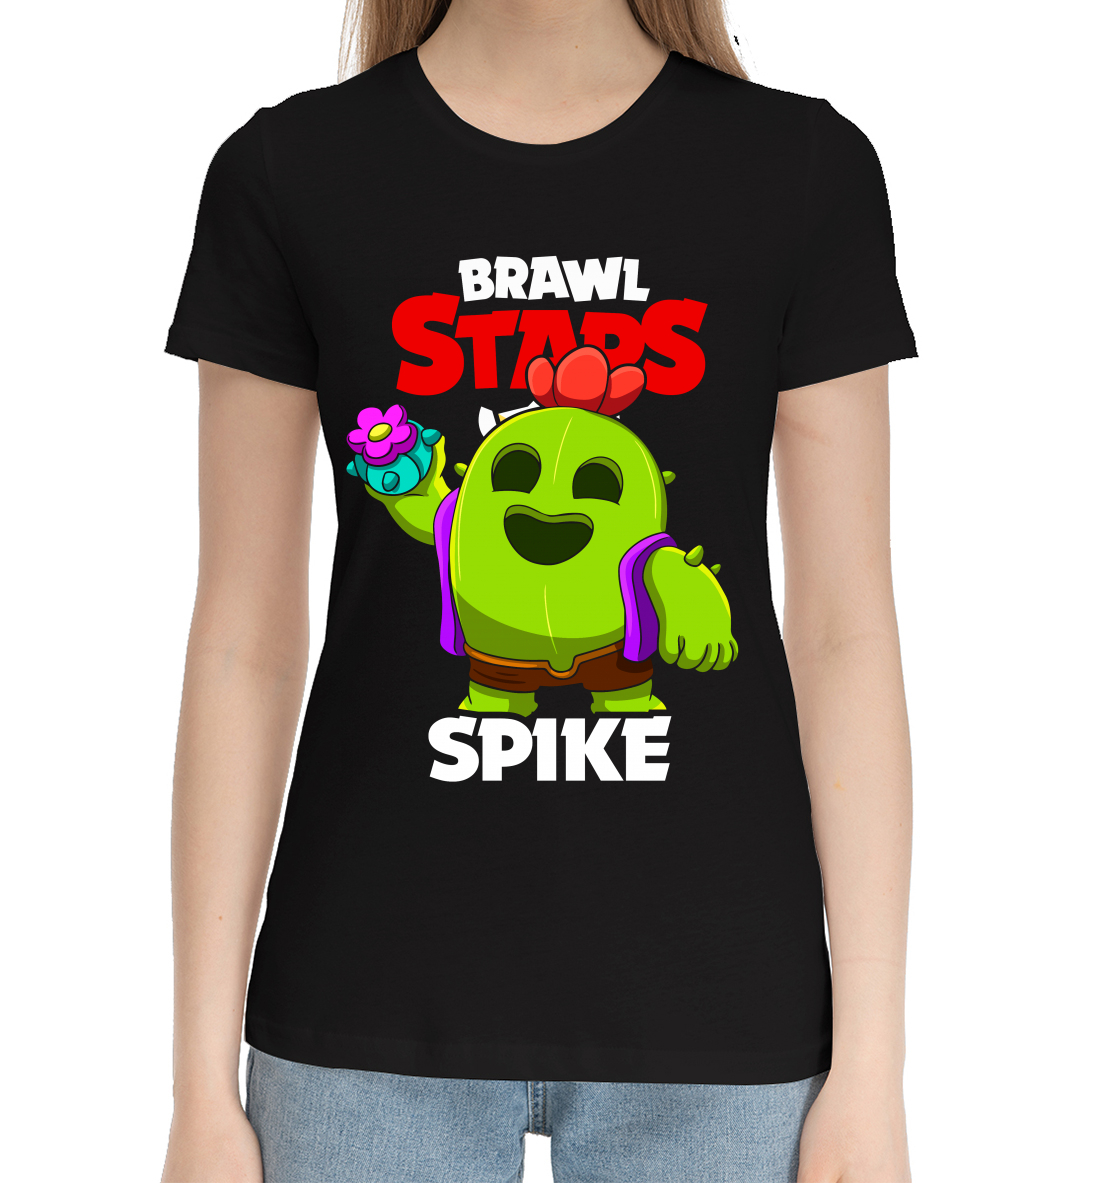 Женская Хлопковая футболка с принтом Brawl Stars, Spike, артикул CLH-692316-hfu-1mp